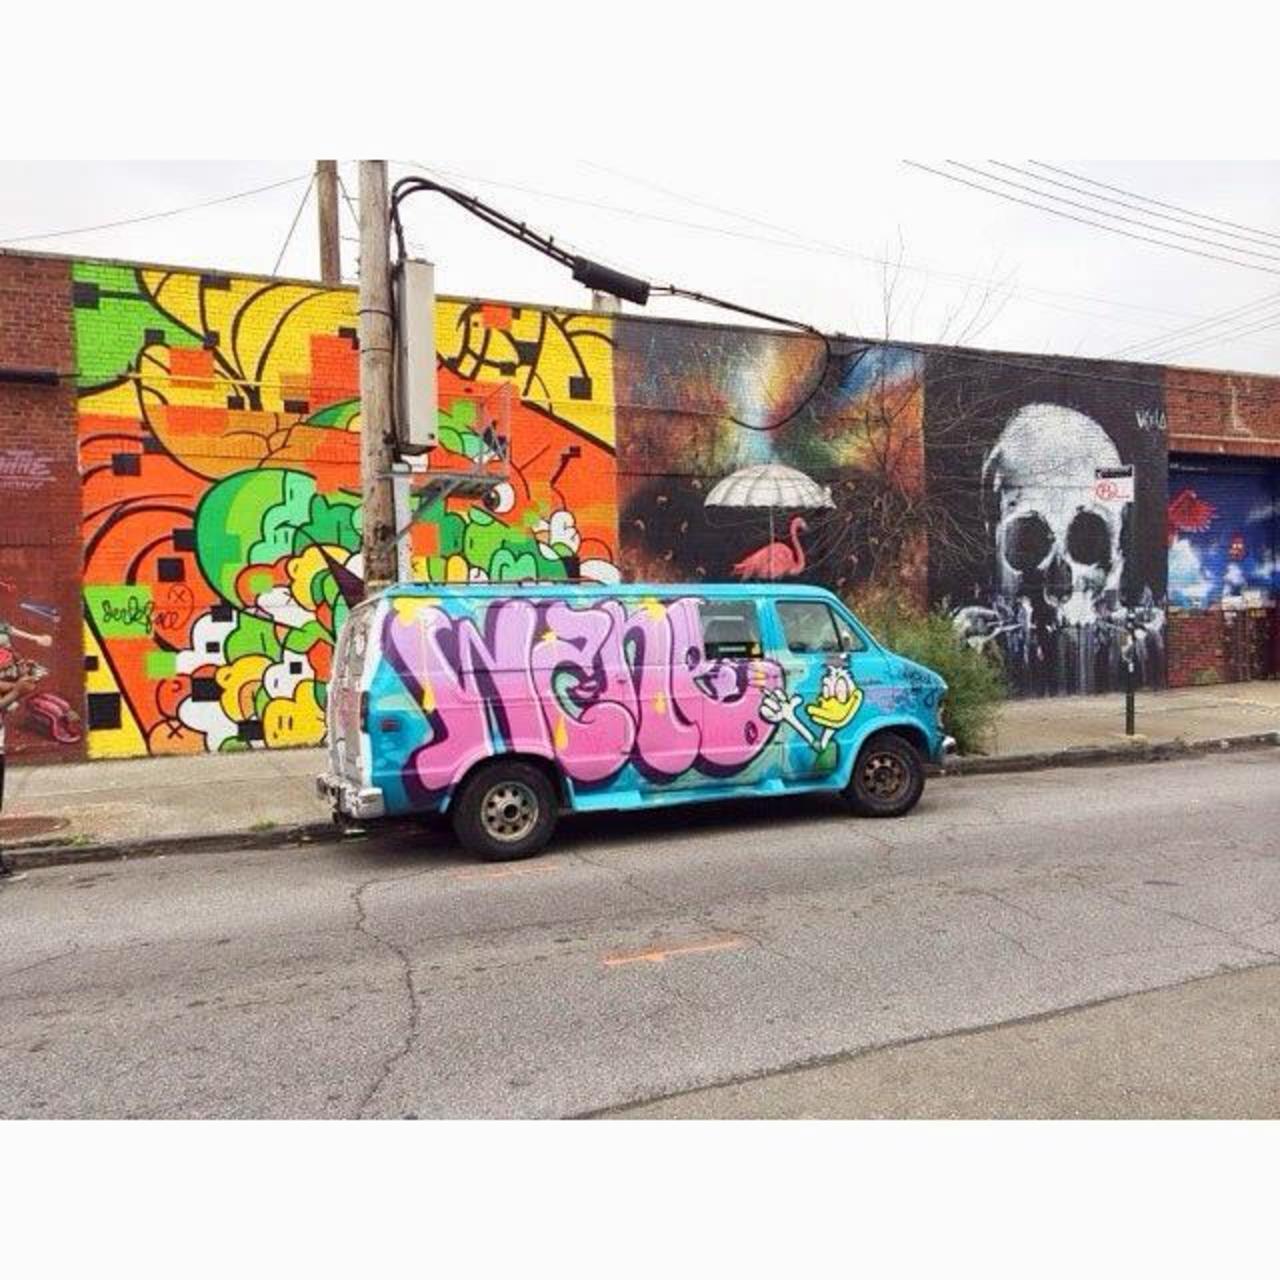 I saw this van in #brooklyn . Does anyone know of the #artist ? #streetart #graffiti http://t.co/JiNXaTfGdI